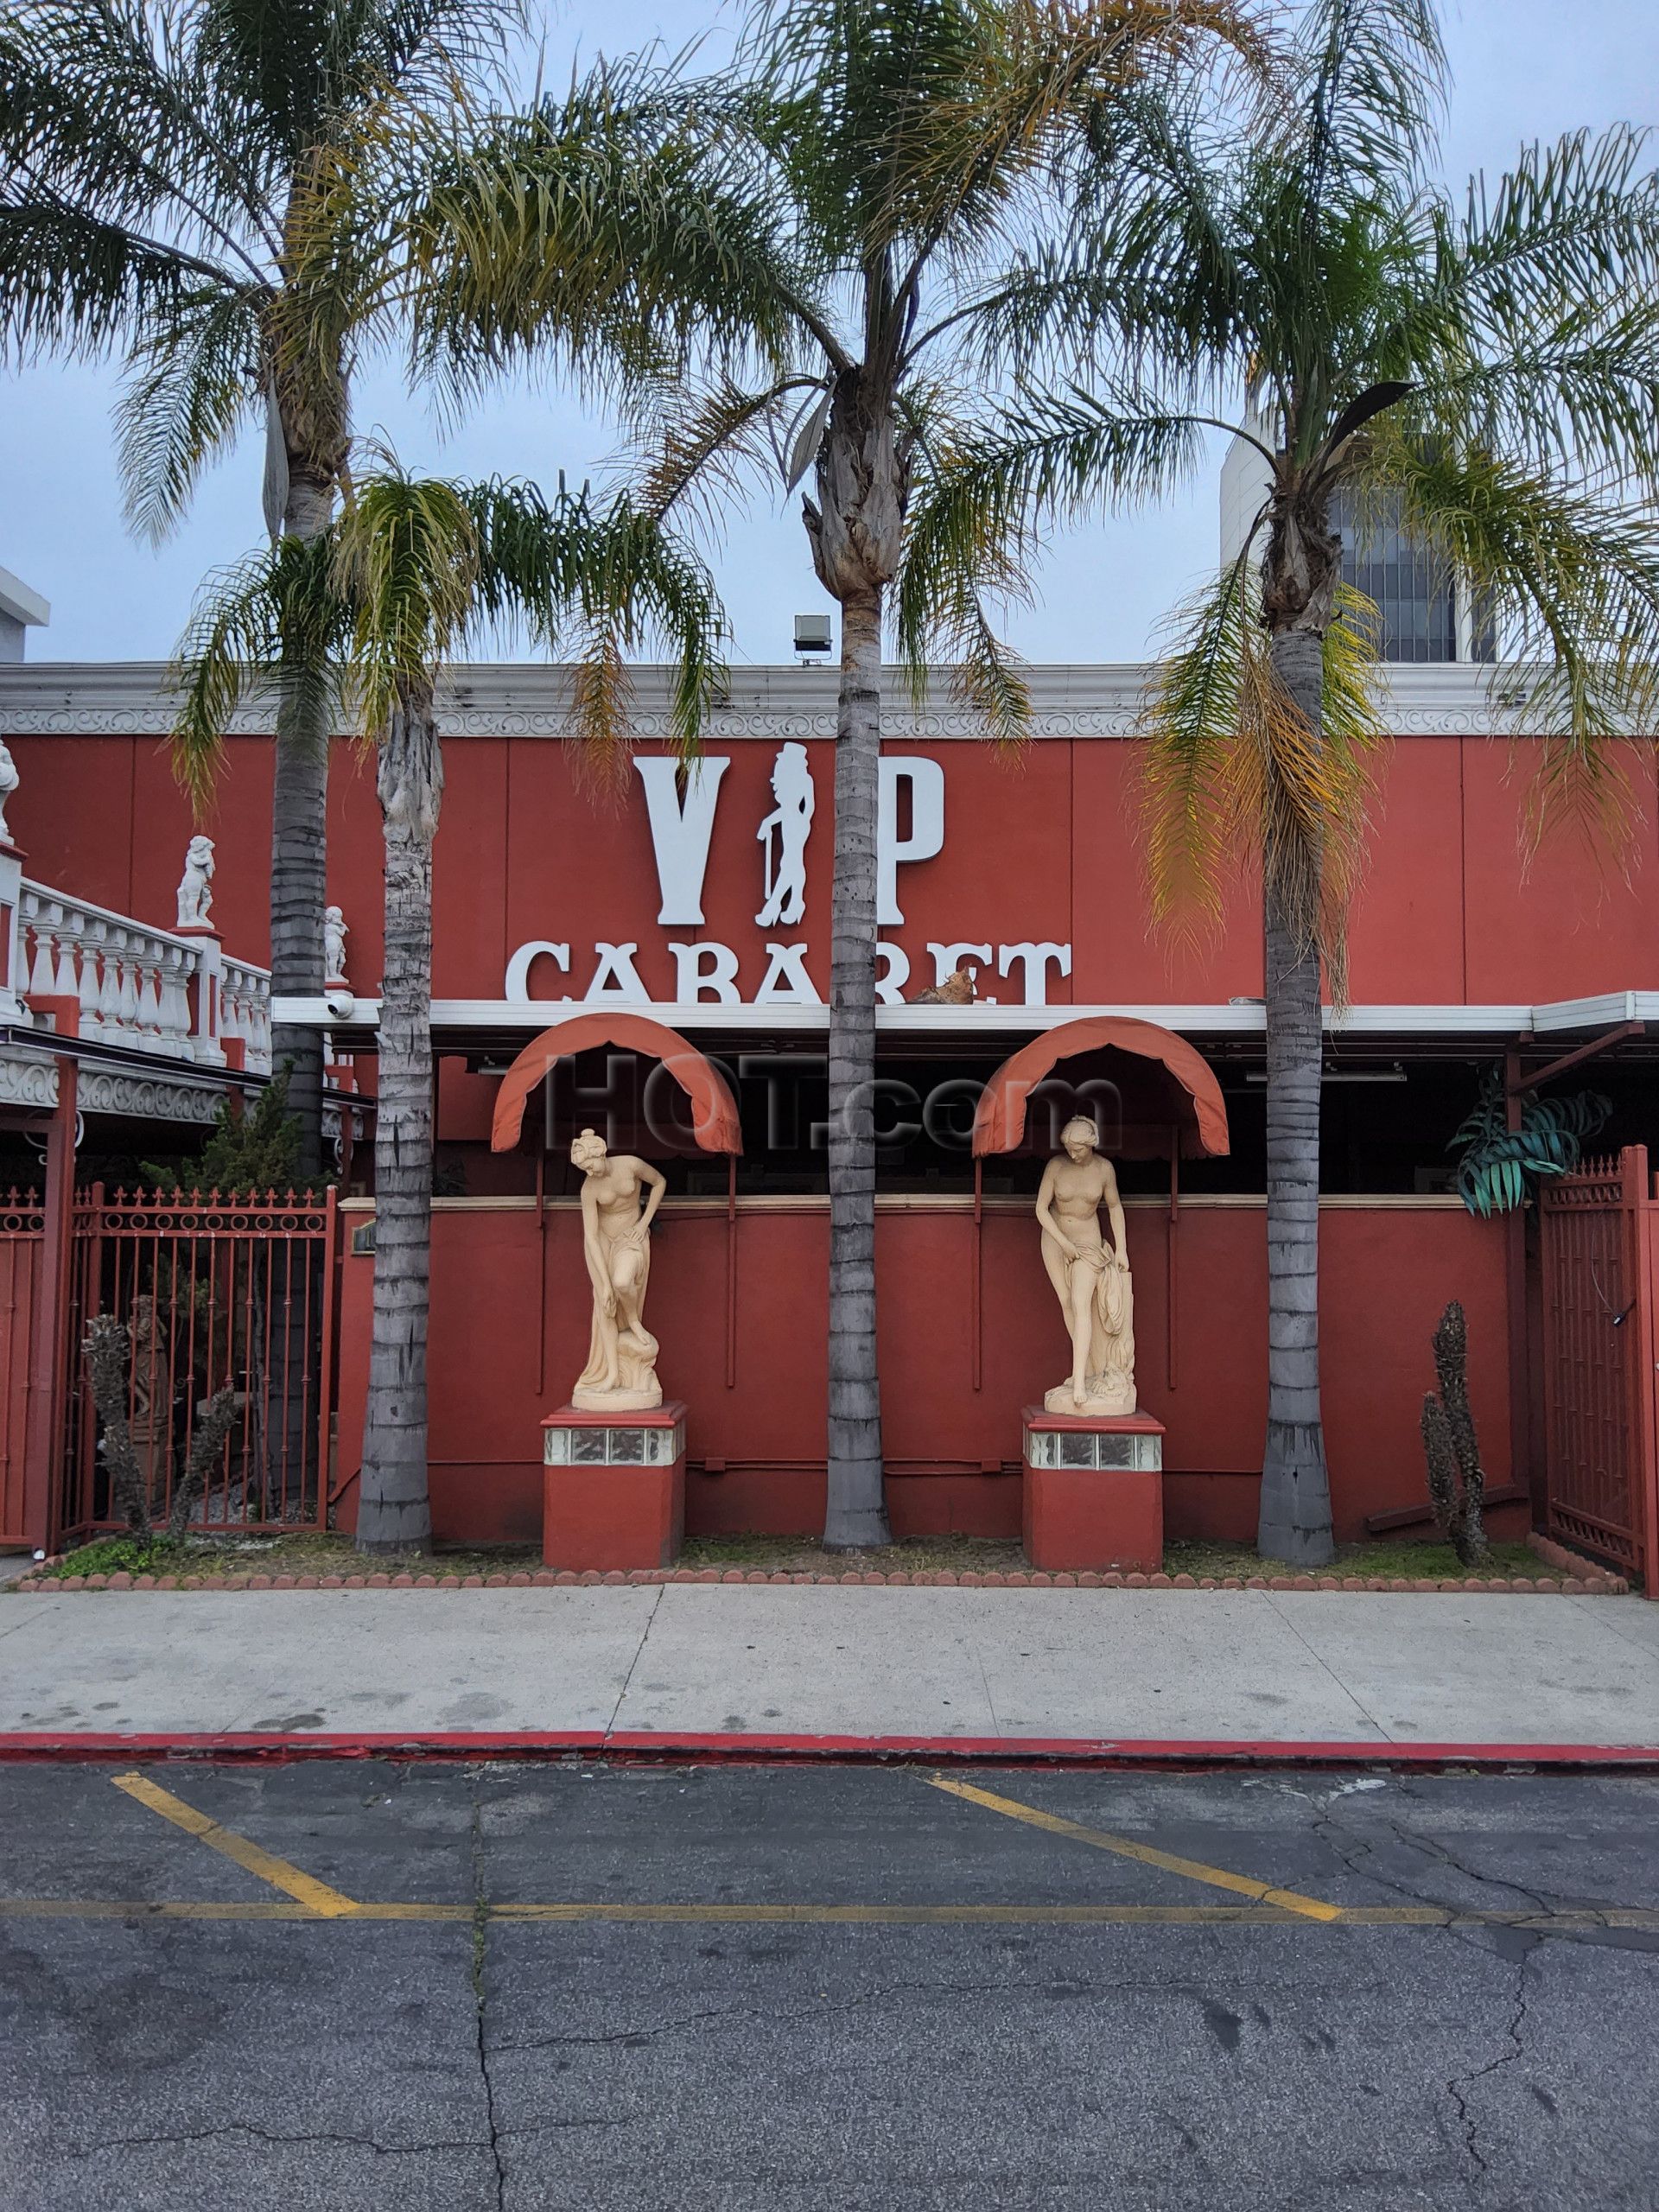 North Hollywood, California Vip Cabaret